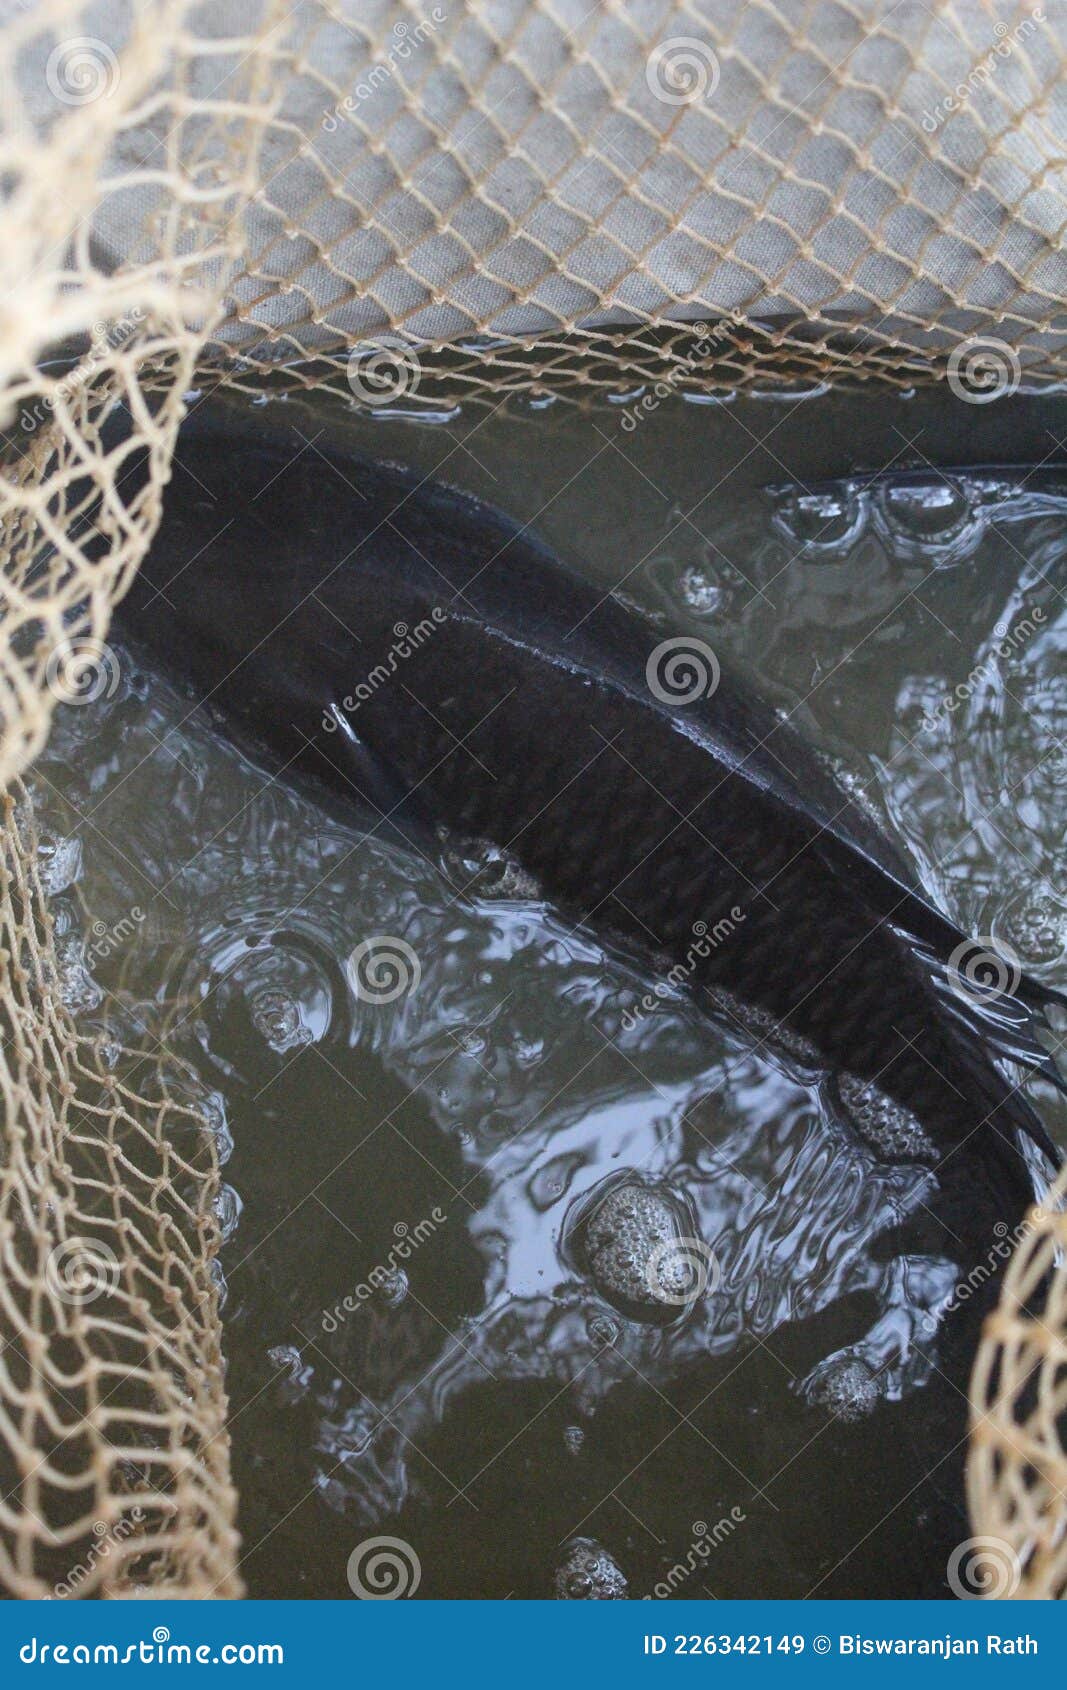 Big Catla Carp Fish in Fishing Net Fishing with Net Hd Stock Image